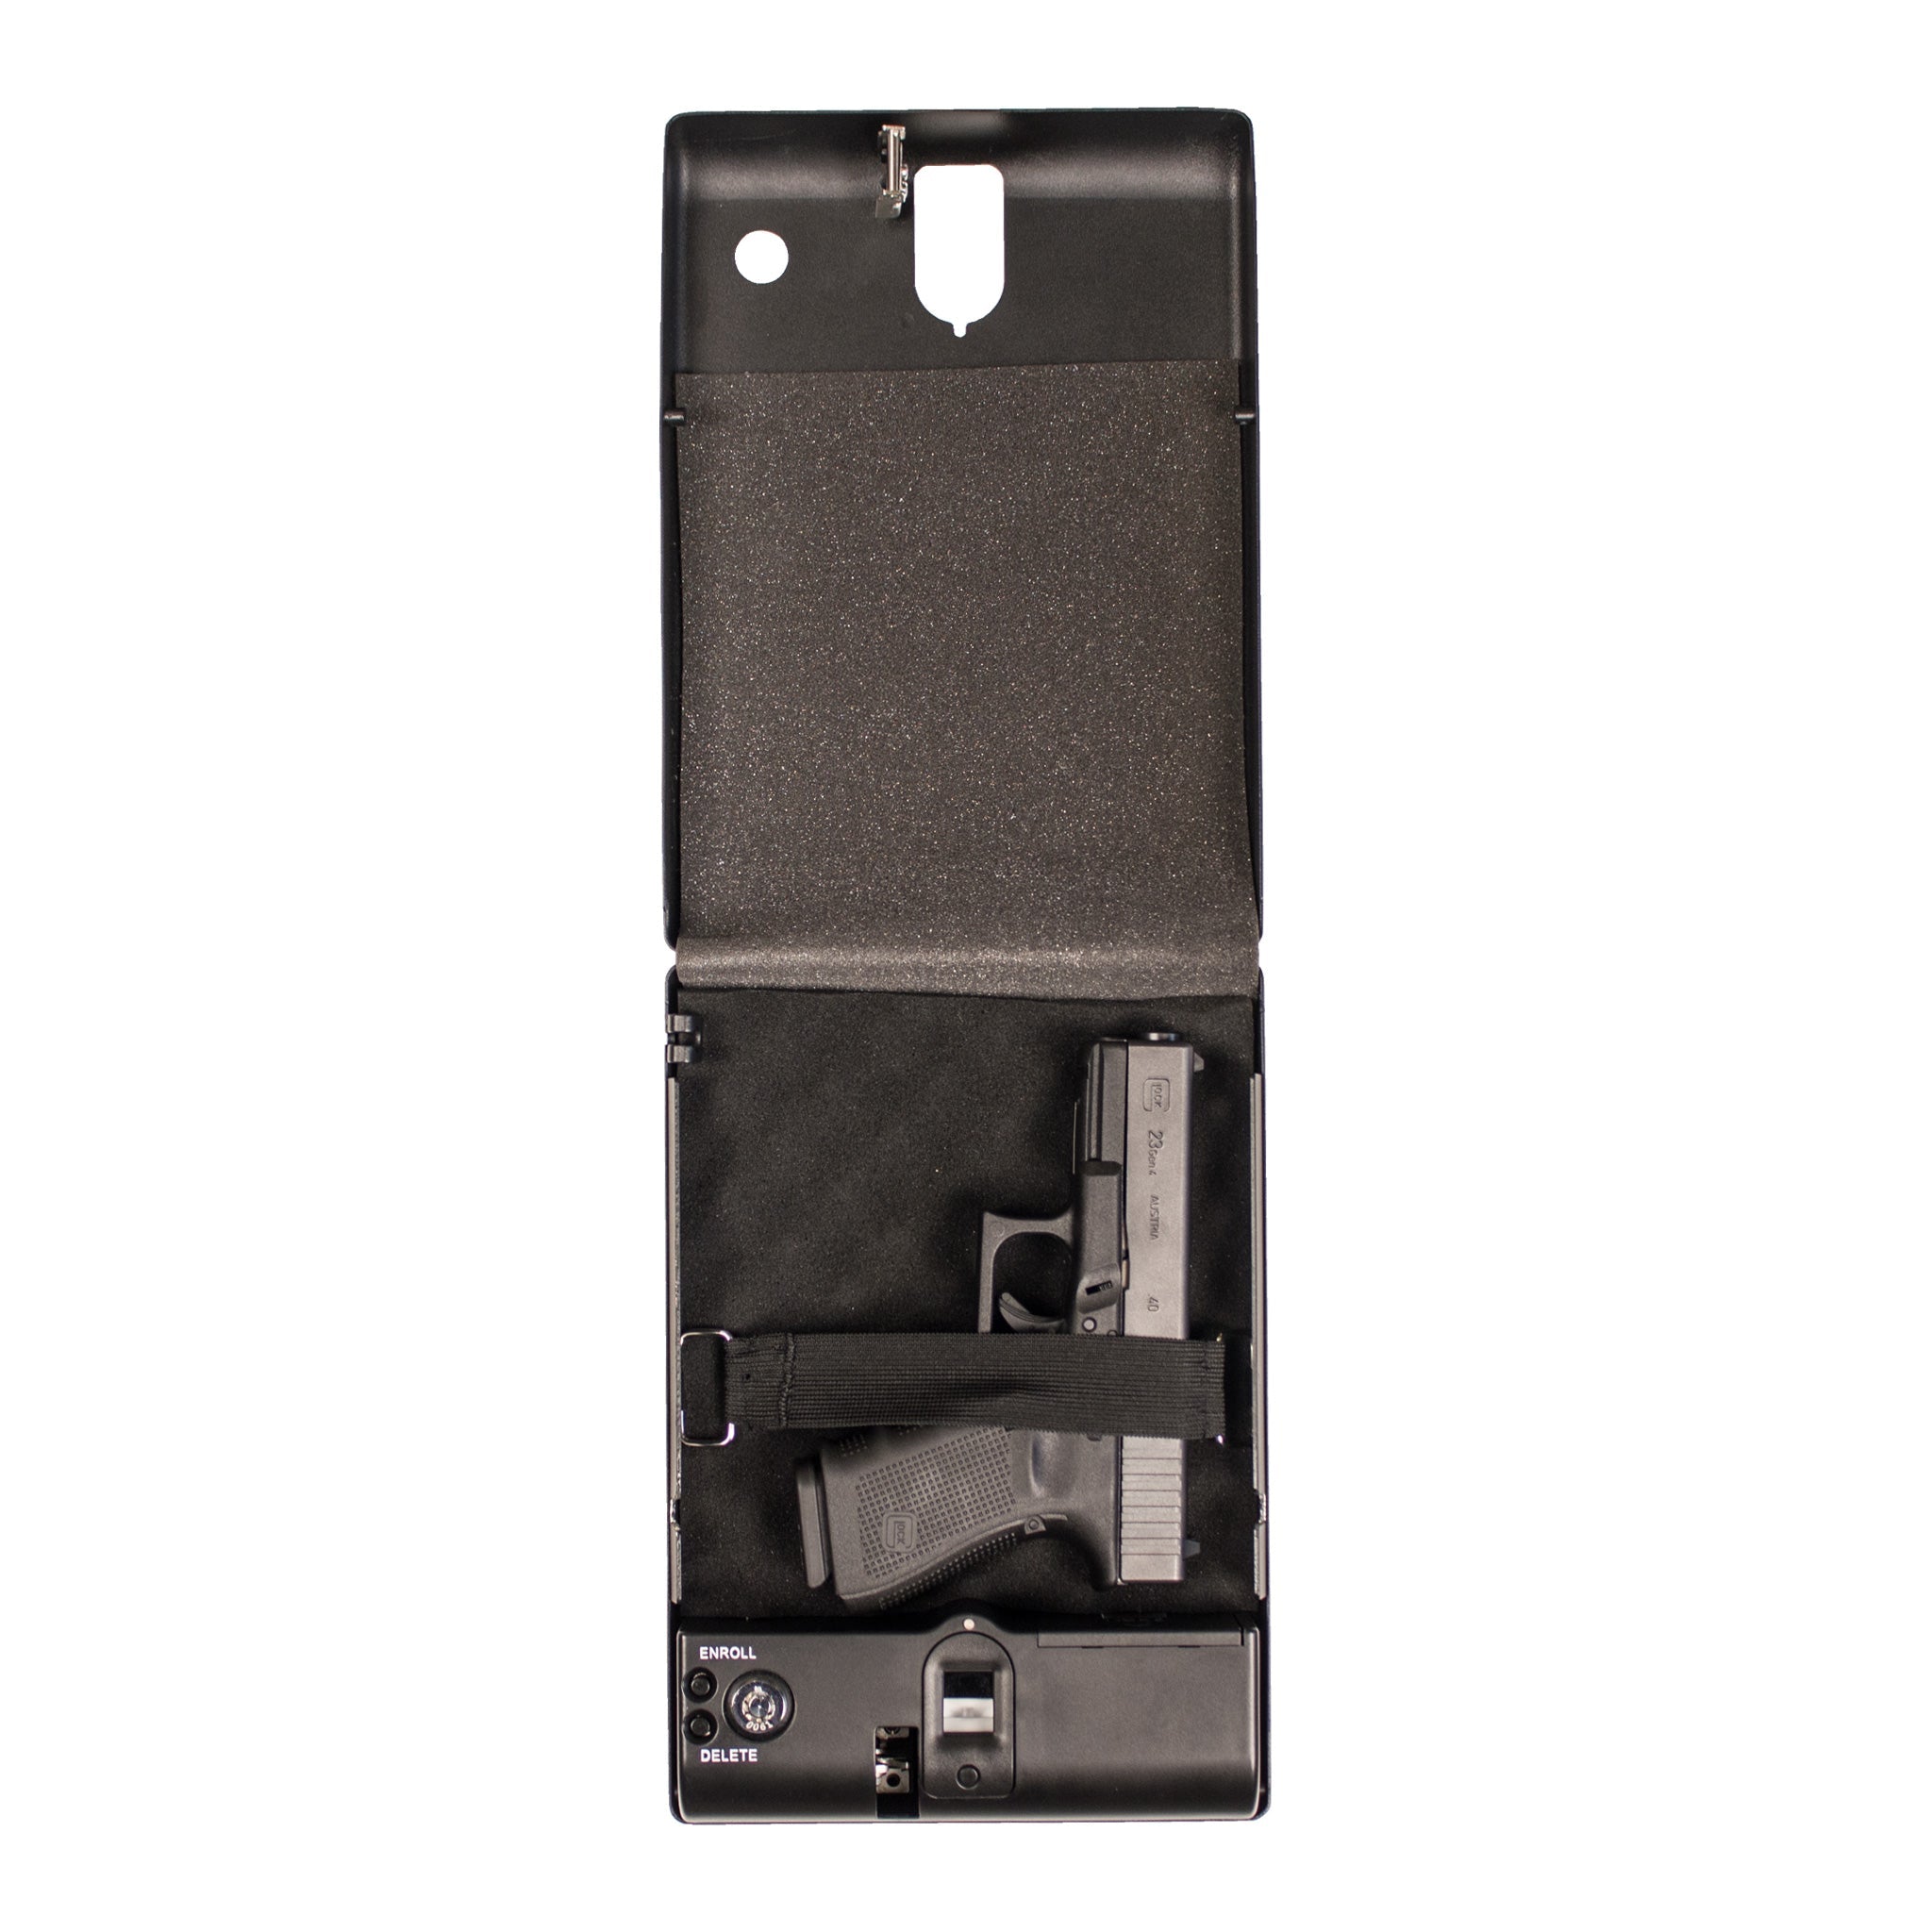 SPS-03B - Small Pistol Safe - Biometric Lock - 10.75" Length